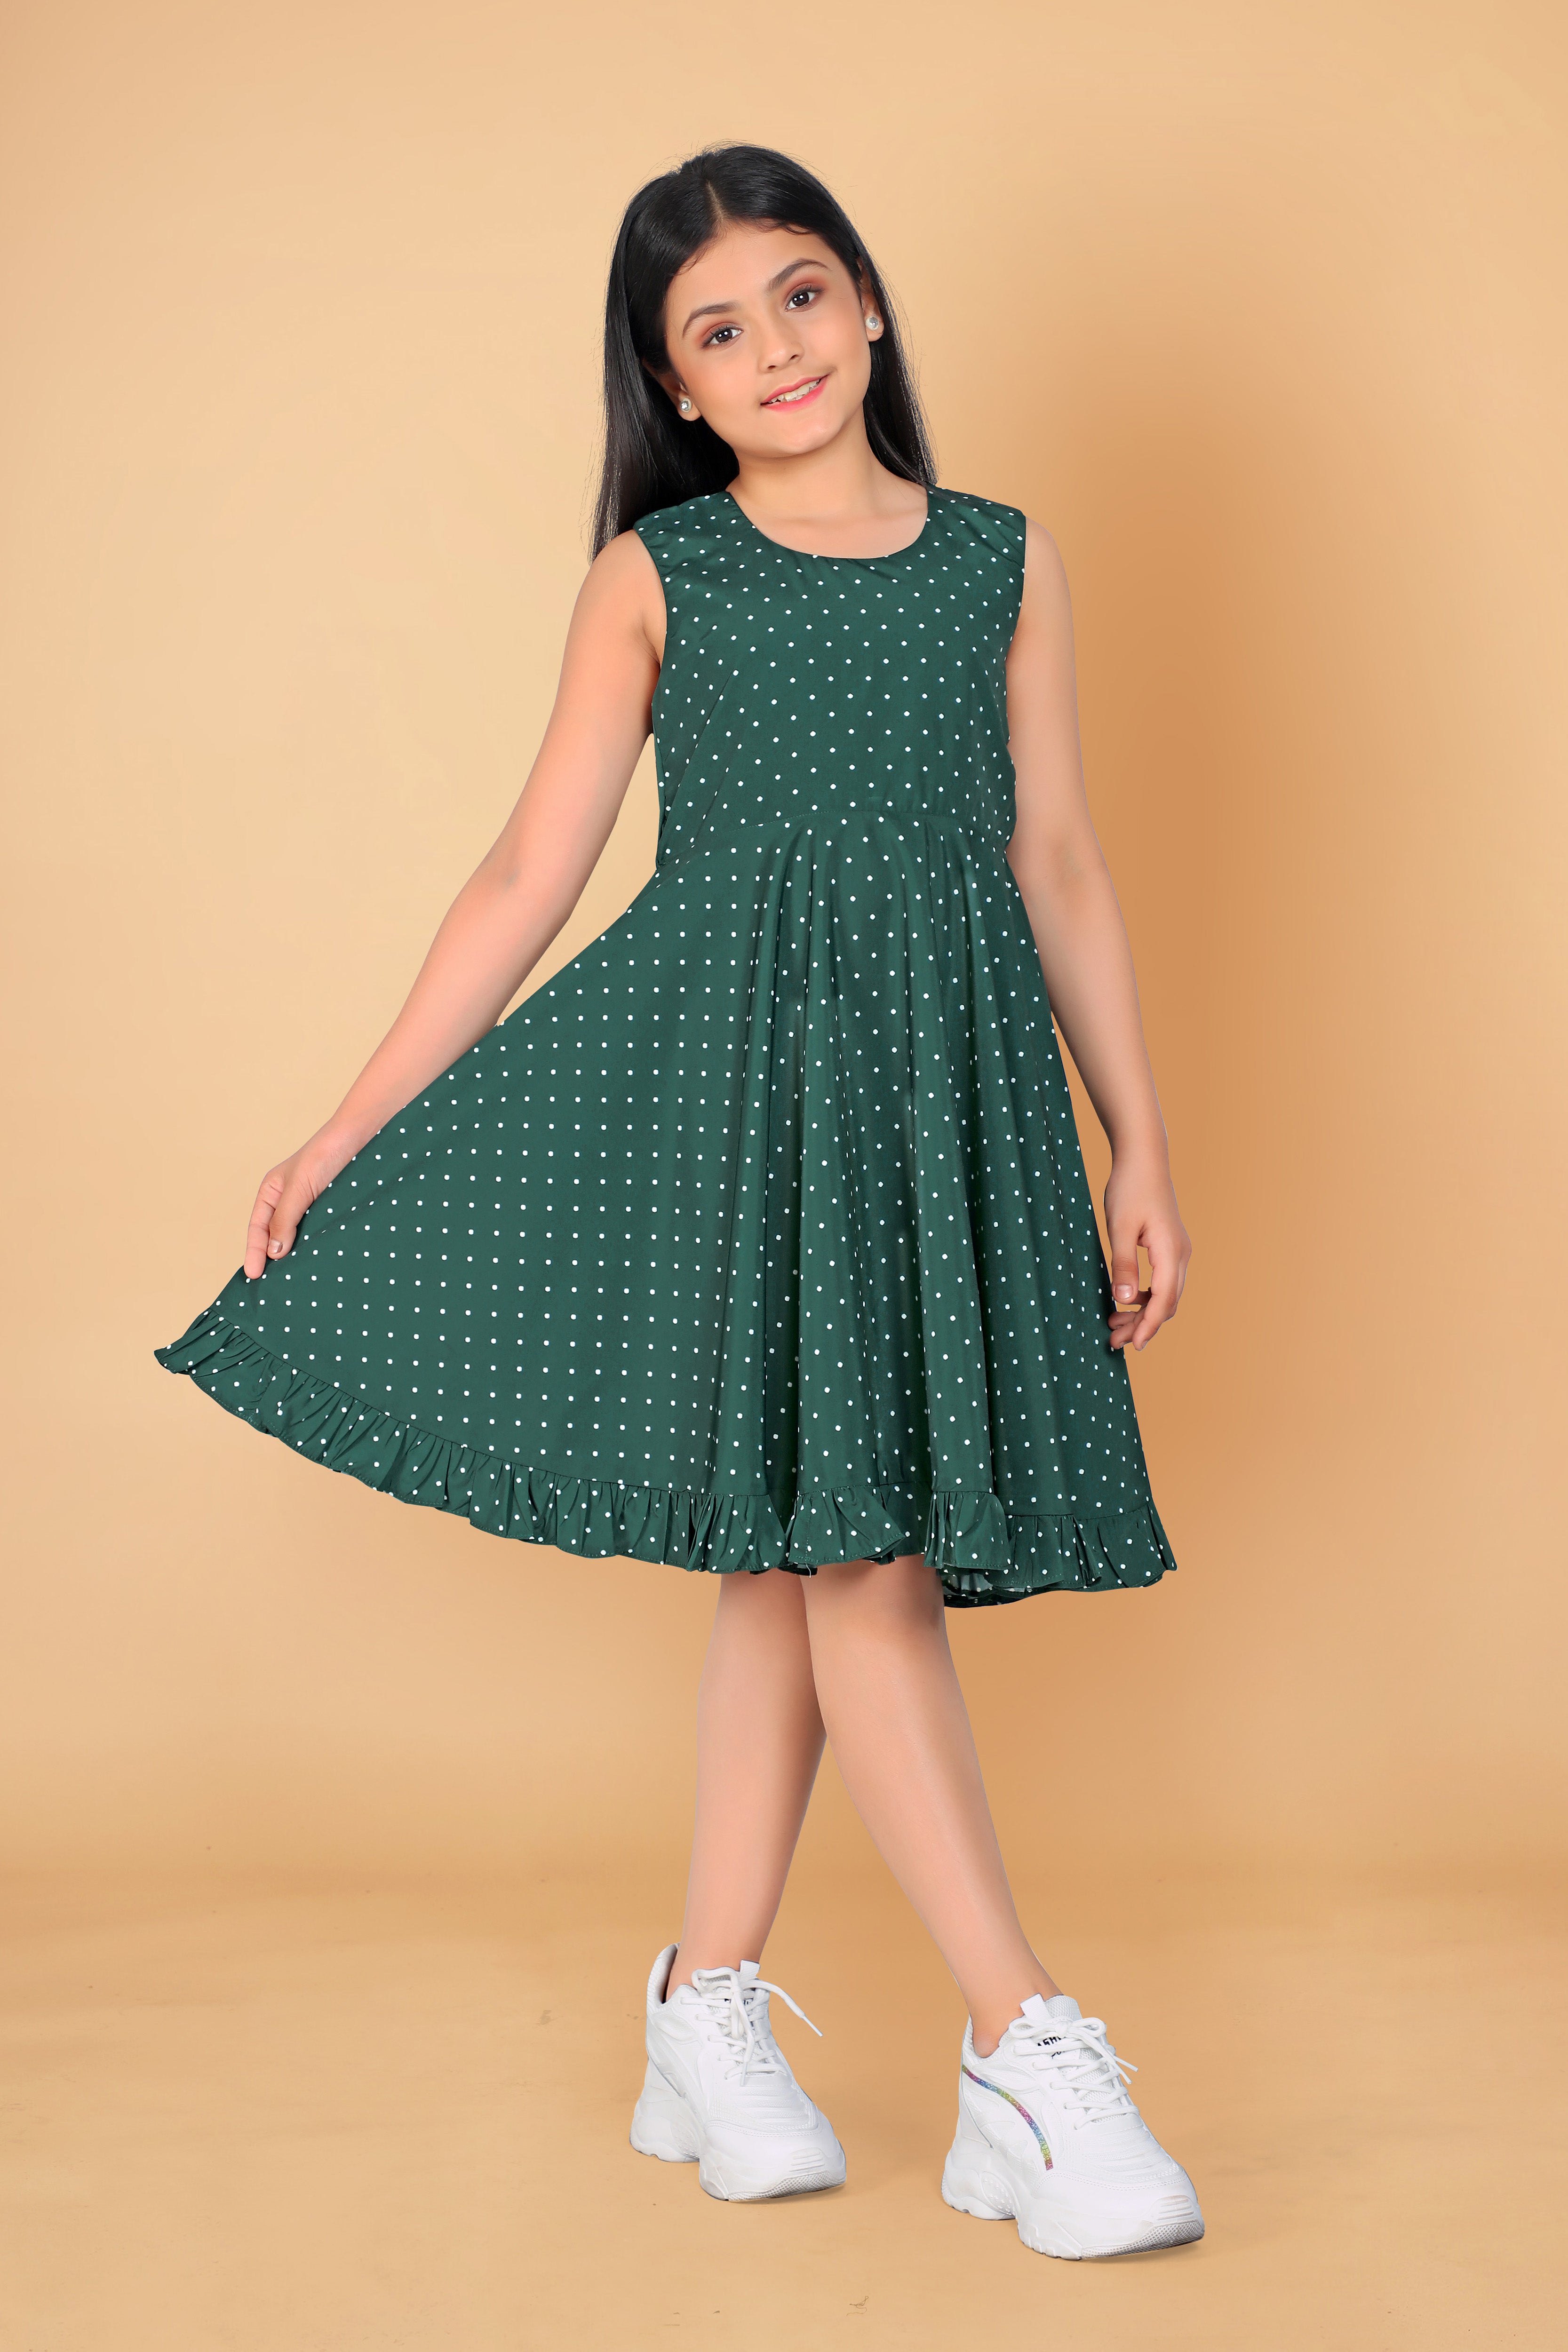 It's Easy Being Green in Green Flower Girl Dresses – Wedding Shoppe